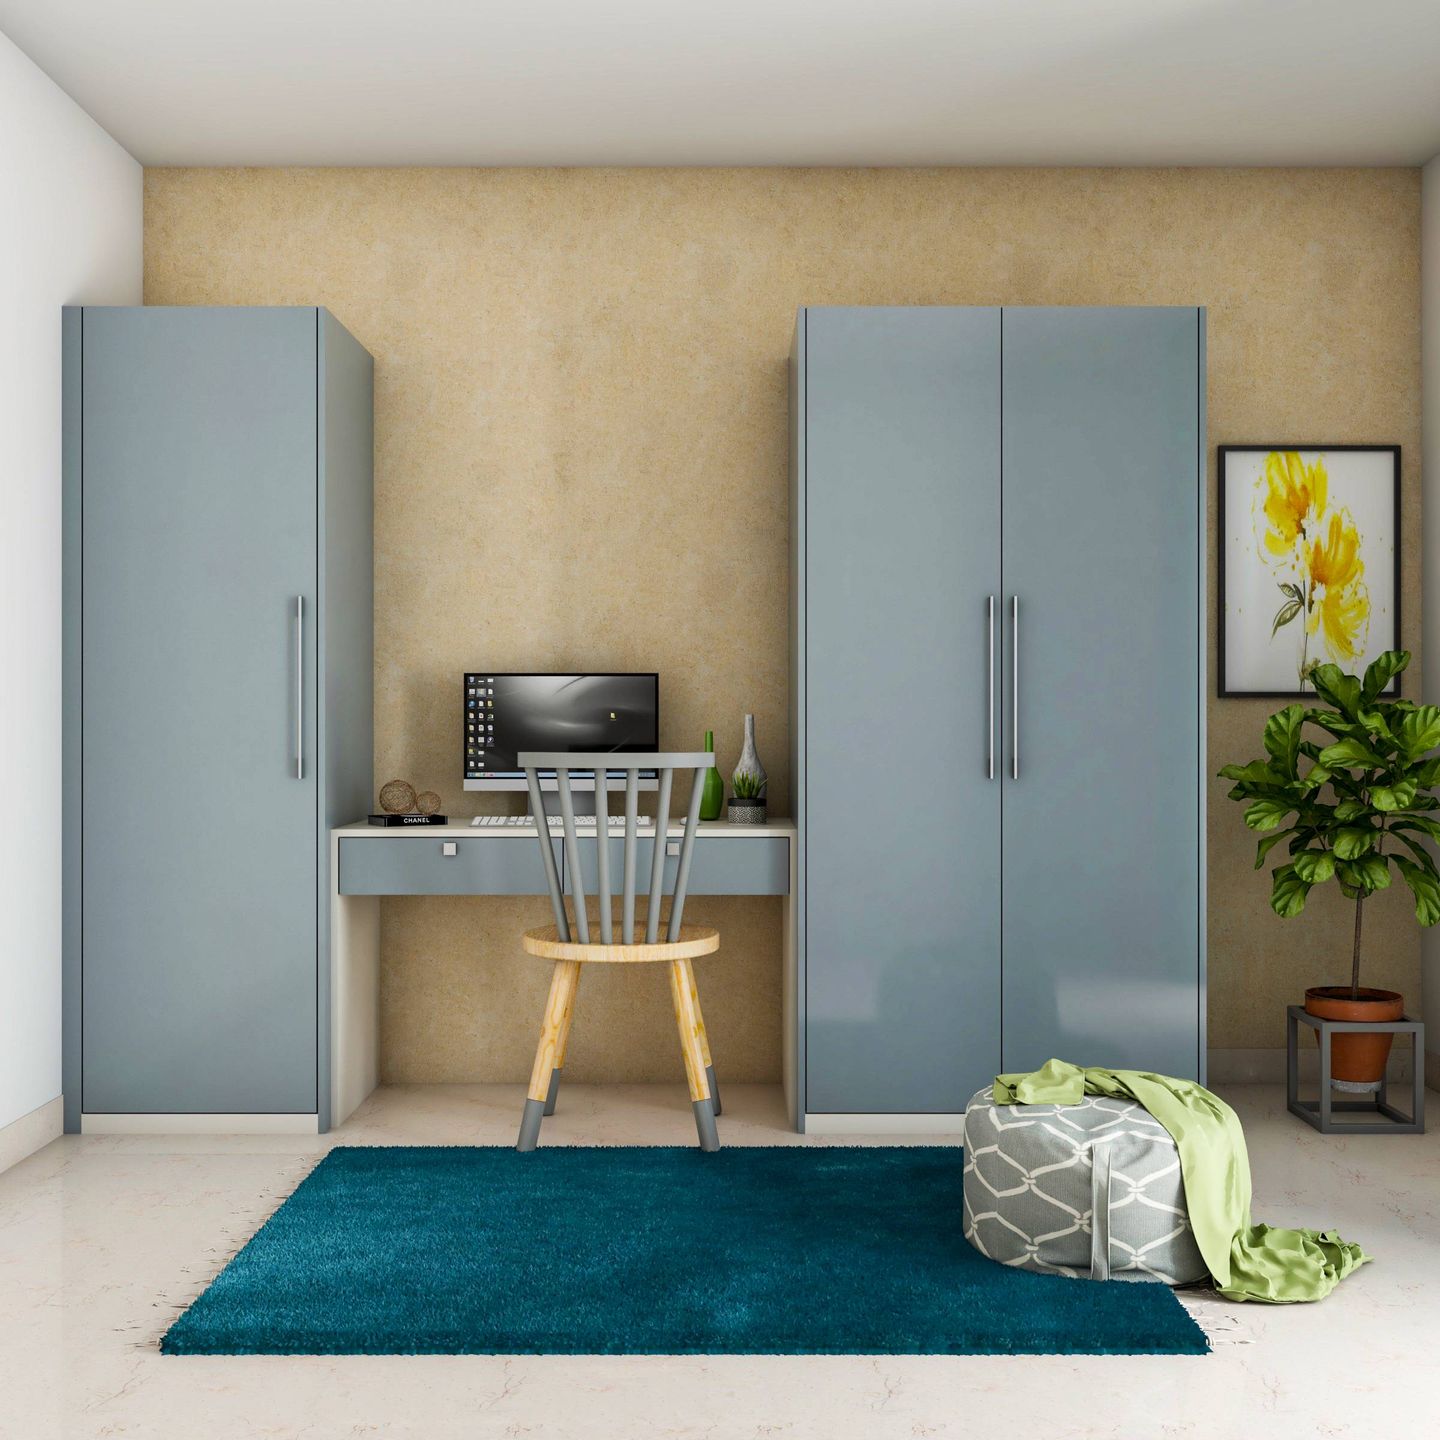 Compact Home Office Design Idea - Livspace